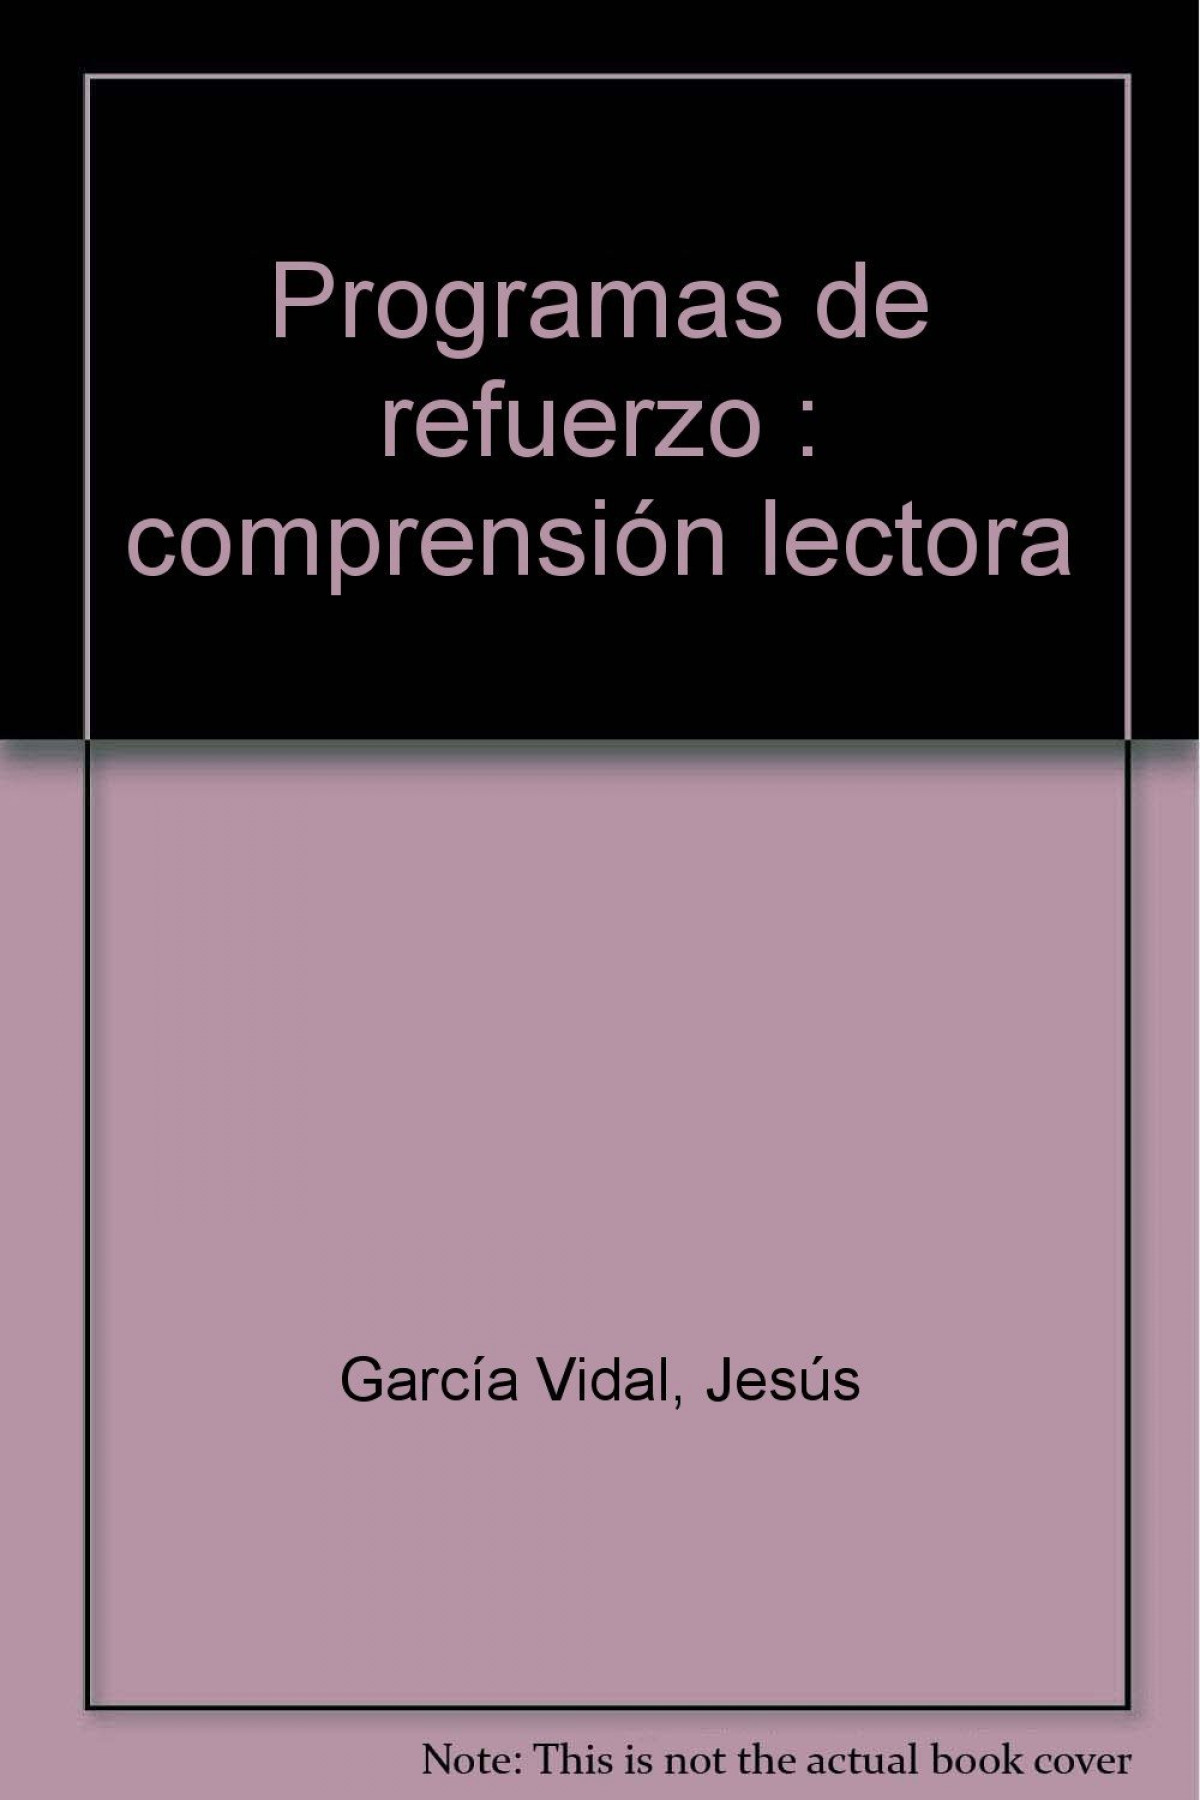 Comprensión lectora COMPRENSIÓN LECTORA - Garcia Vidal, Jesus